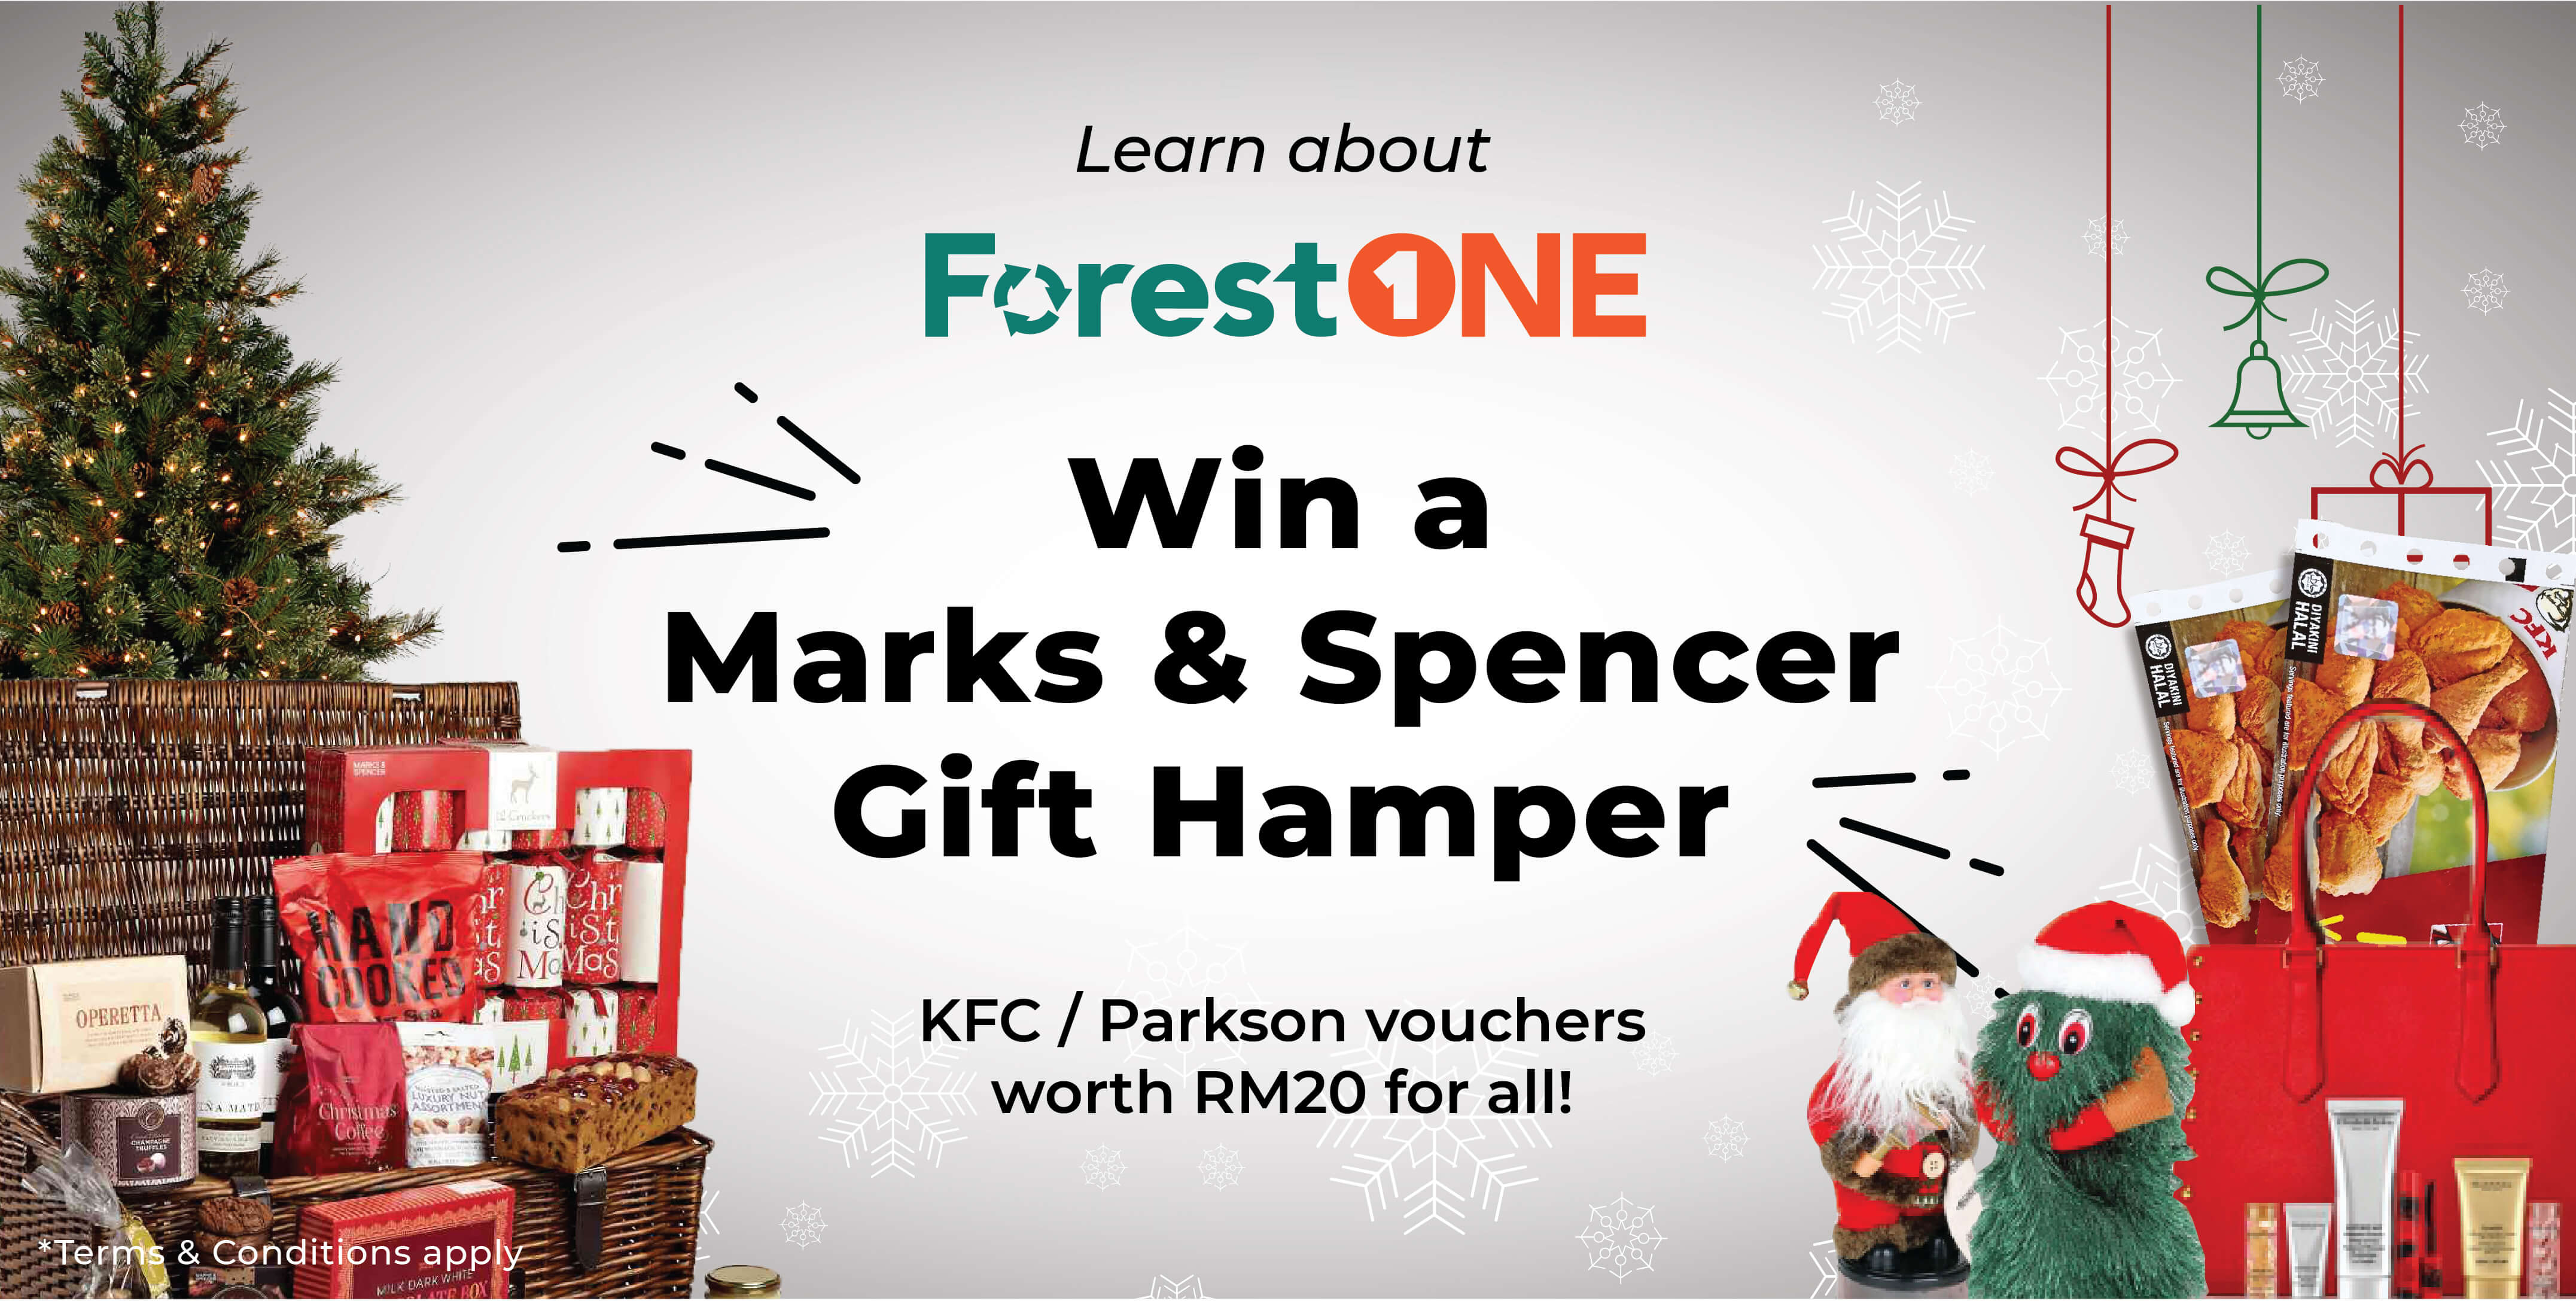 Get KFC / Parkson vouchers & win a Mark & Spencer Hamper!